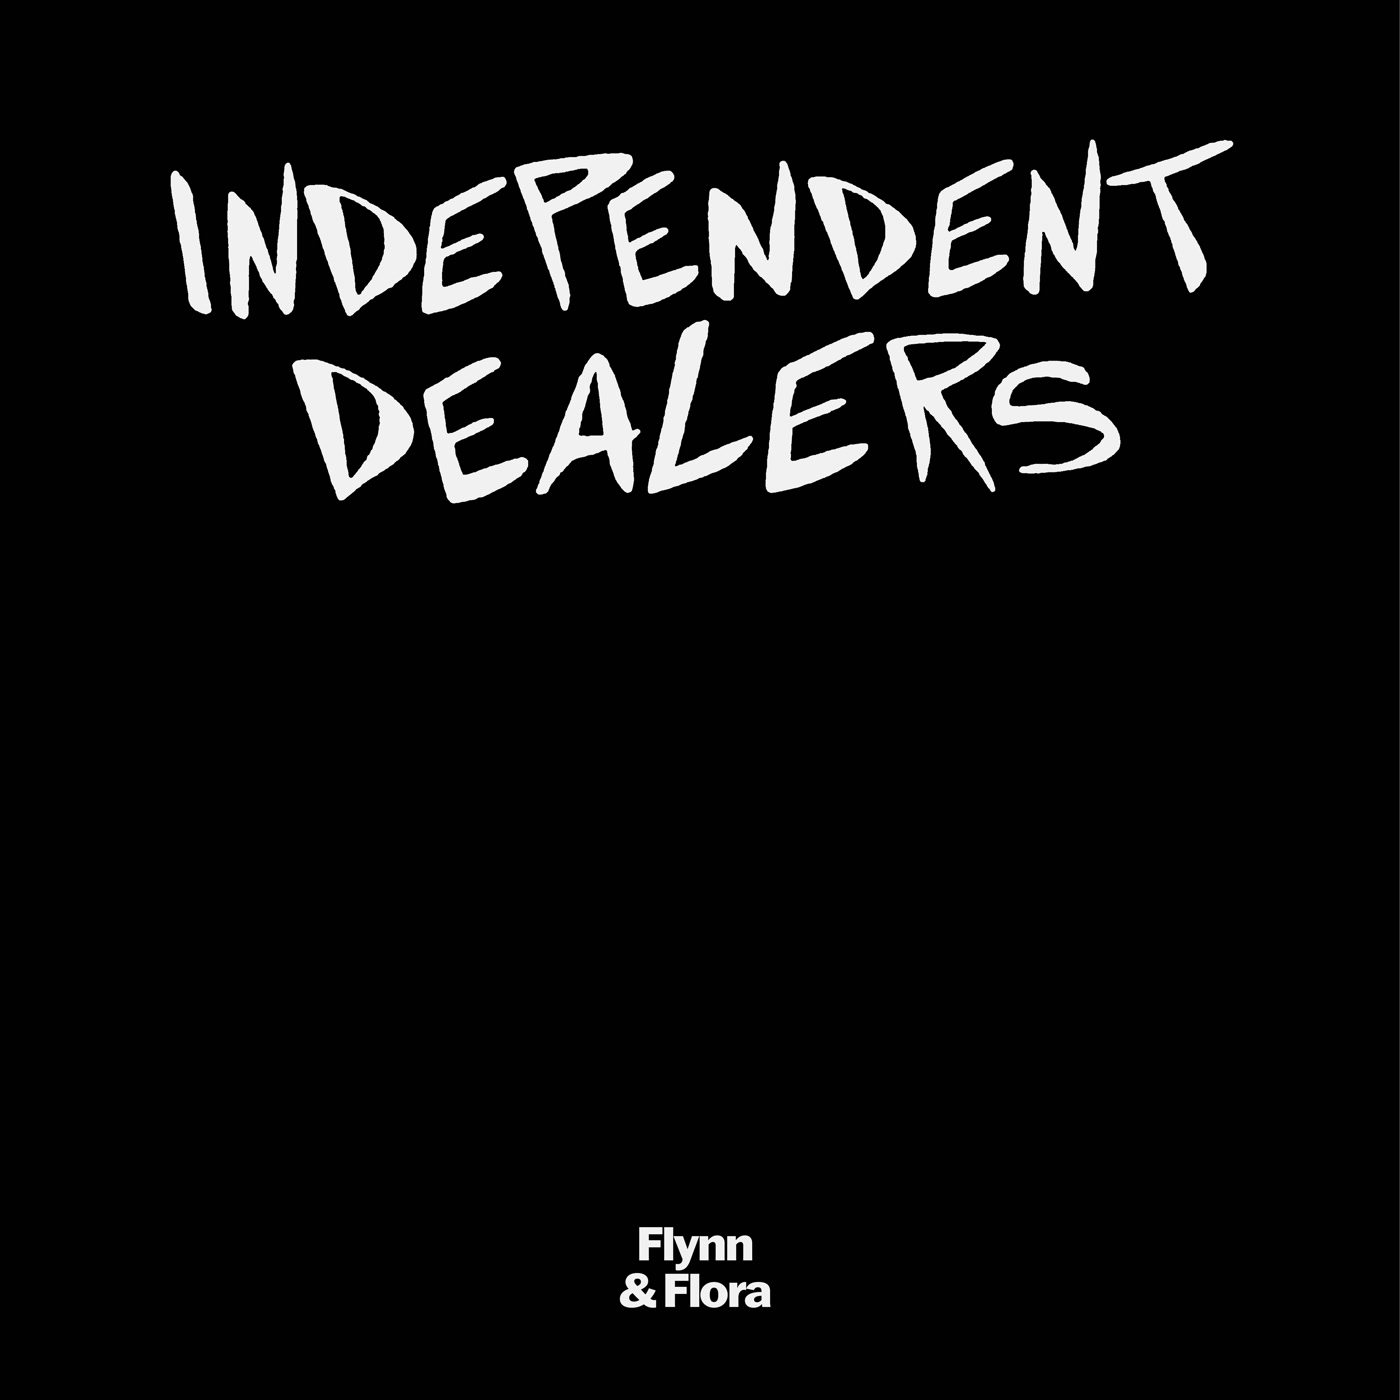 Flynn & Flora – Independent Dealers (City Road Records)